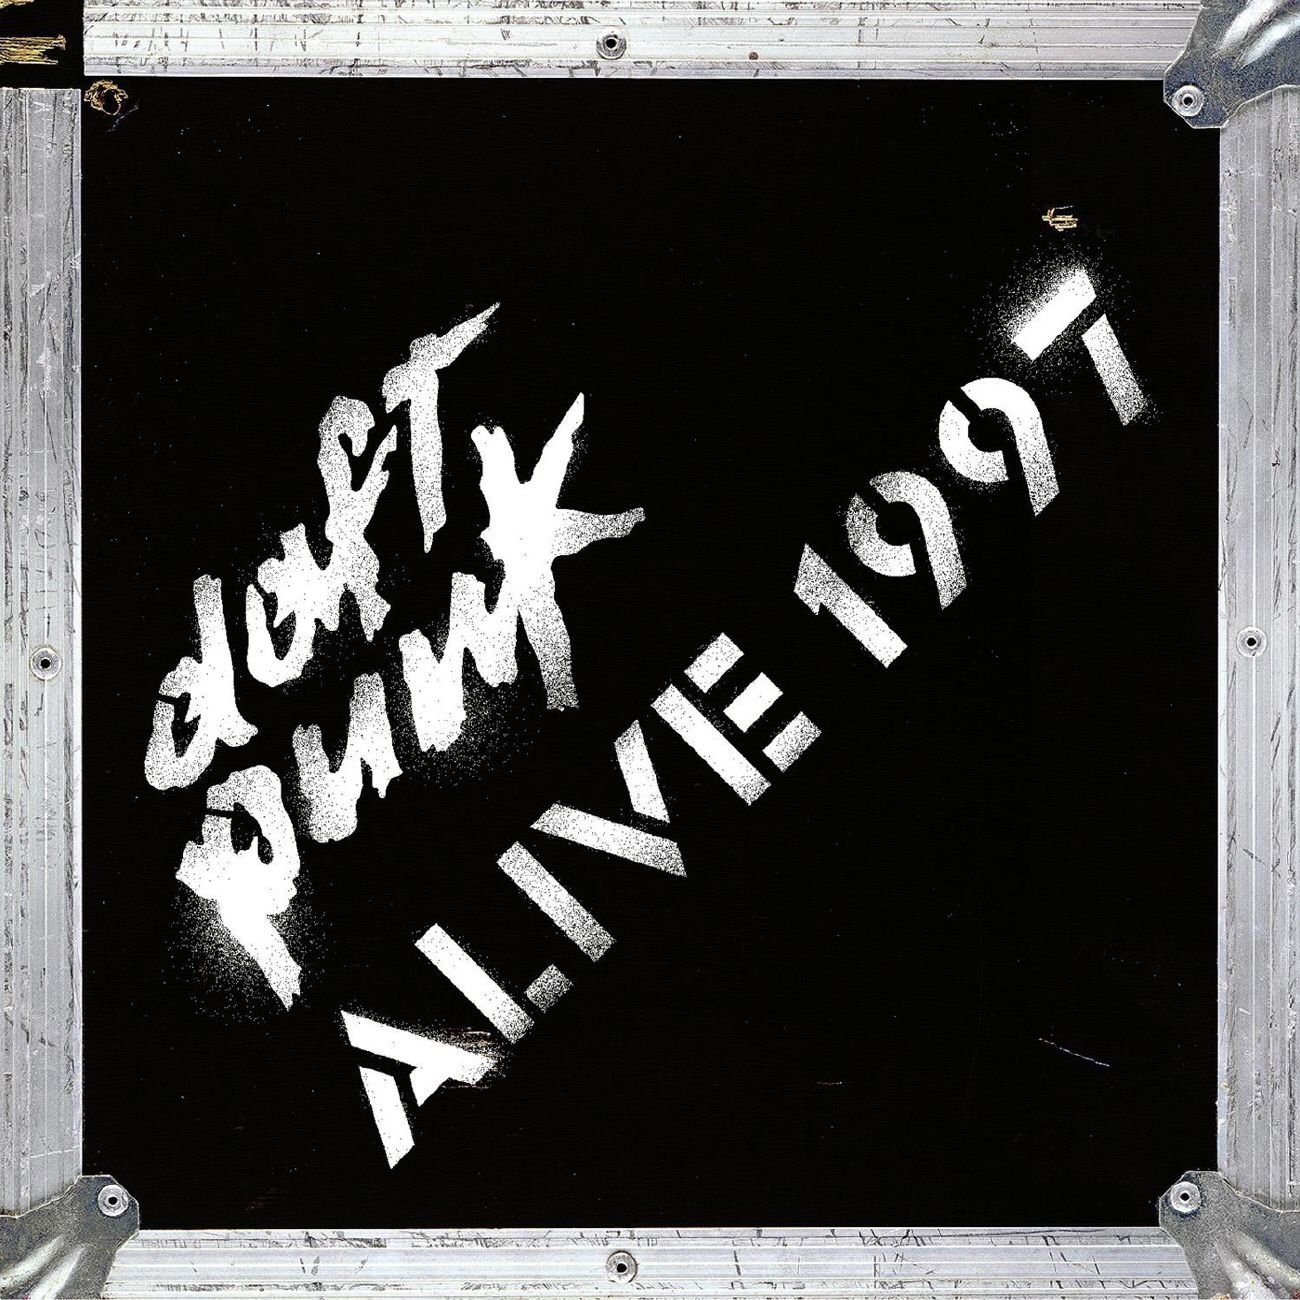 Daft Punk "Alive 1997" 2LP